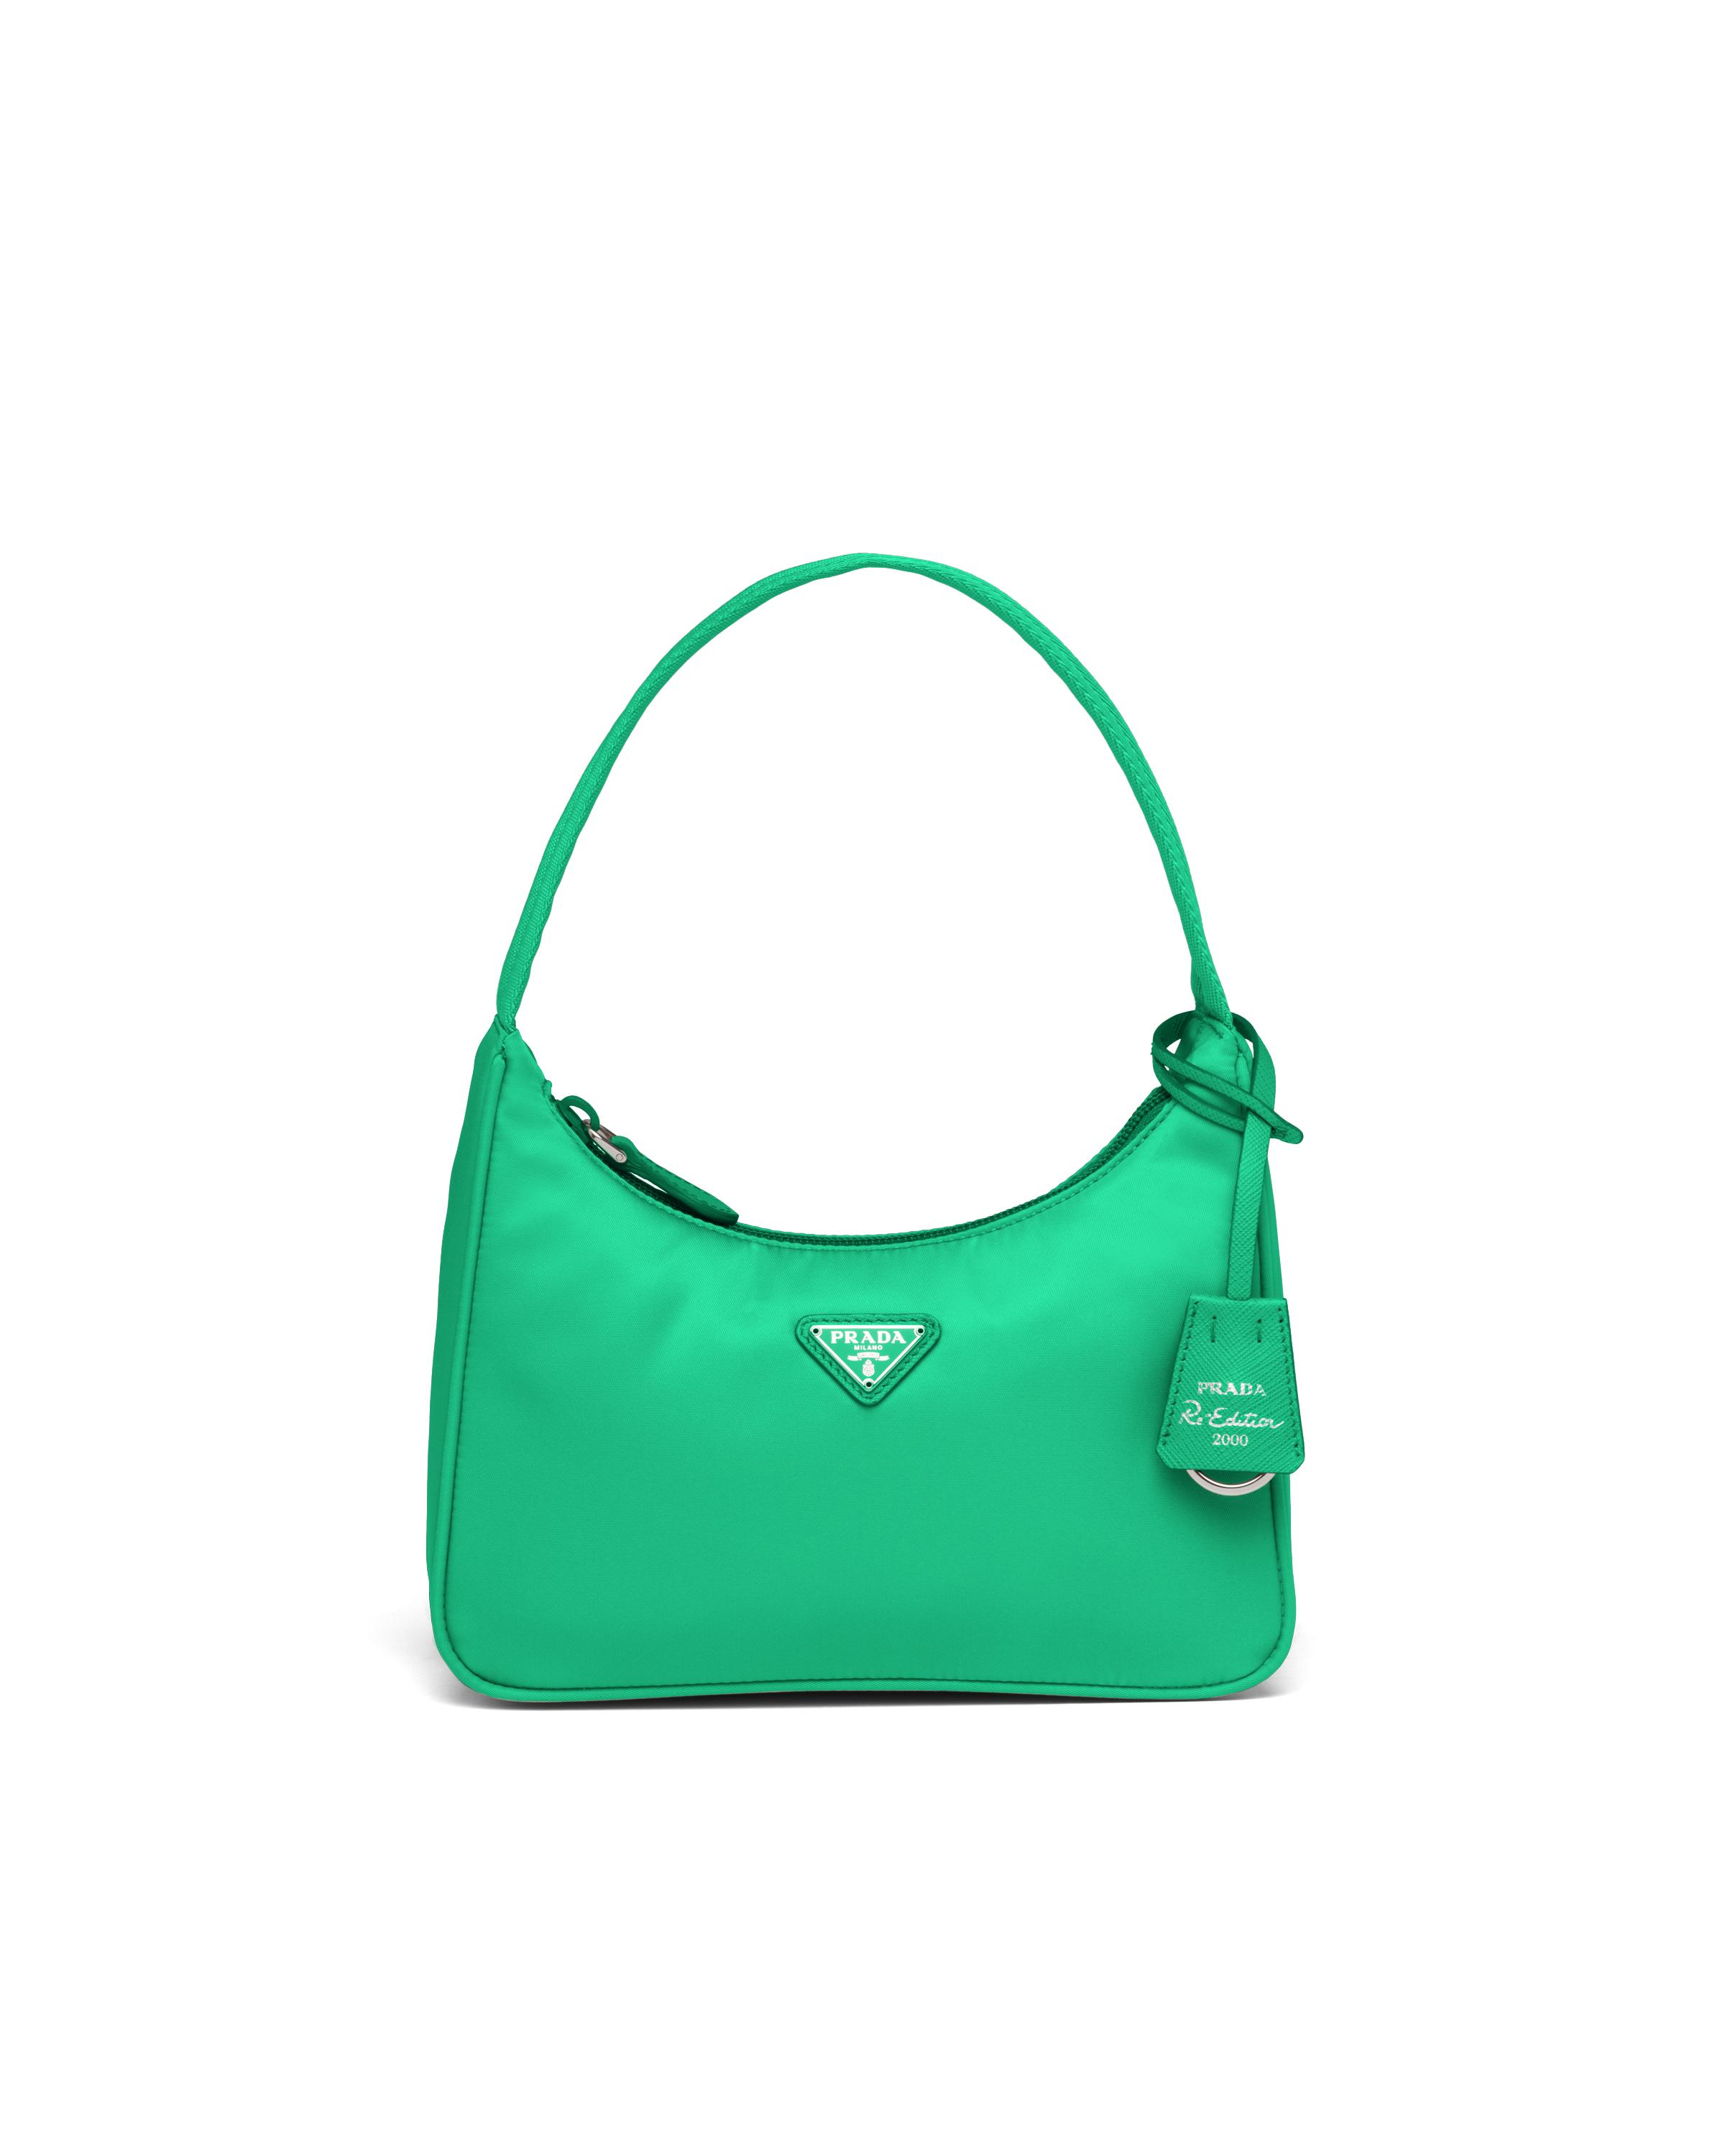 Prada Synthetic Re-edition 2000 Nylon Mini Bag in Mint Green (Green) | Lyst